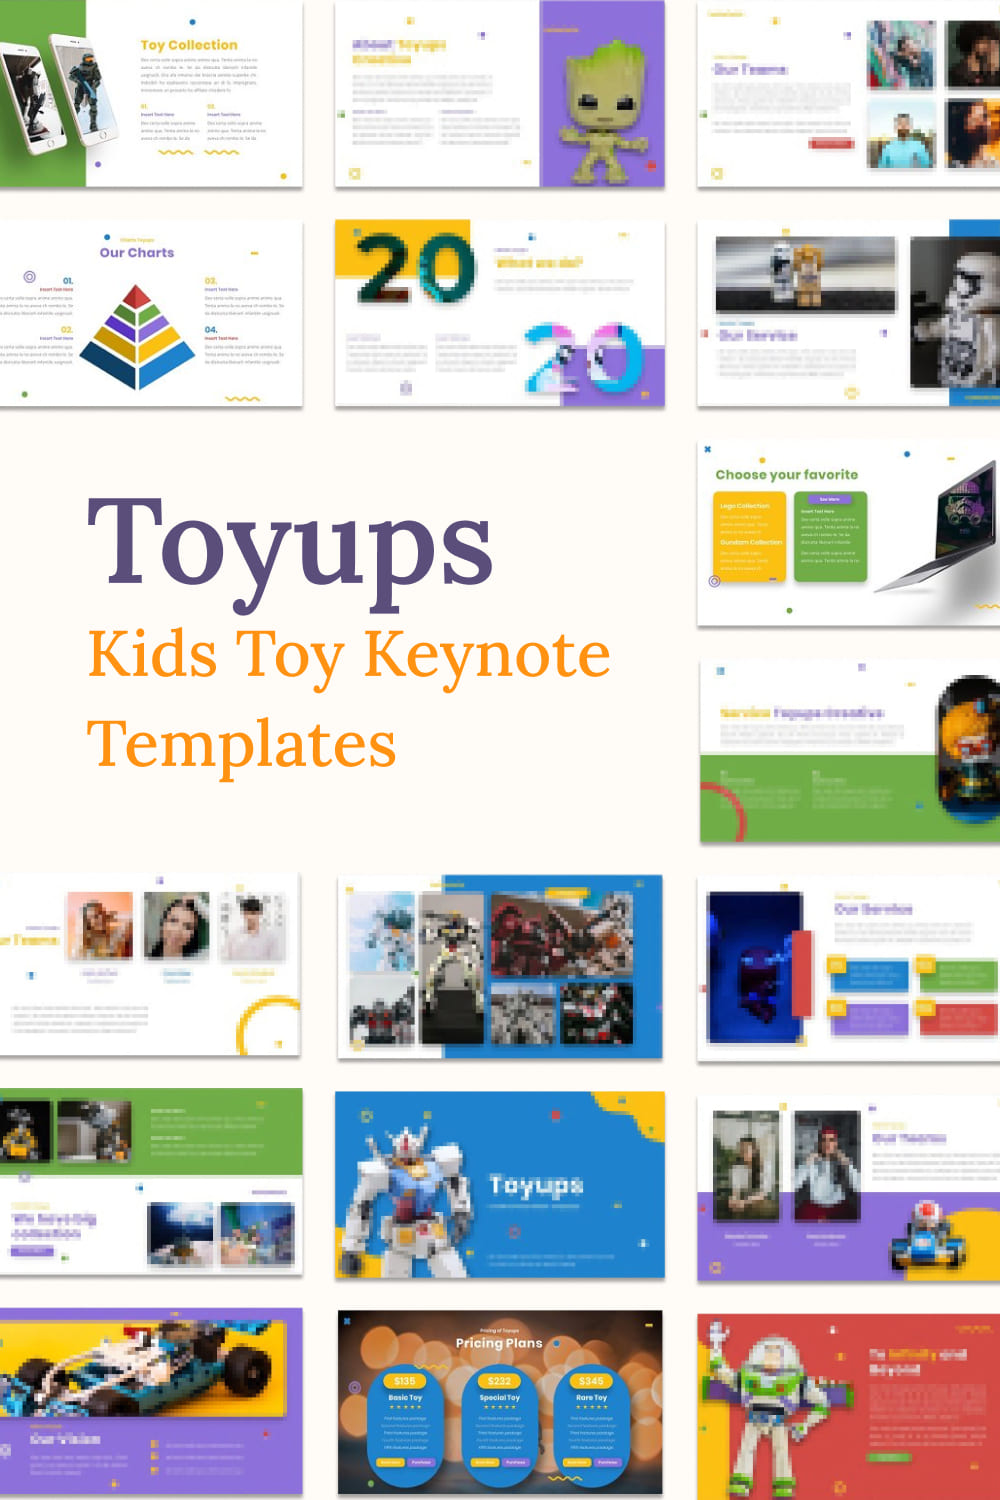 toyups kids toy keynote templates 02 727